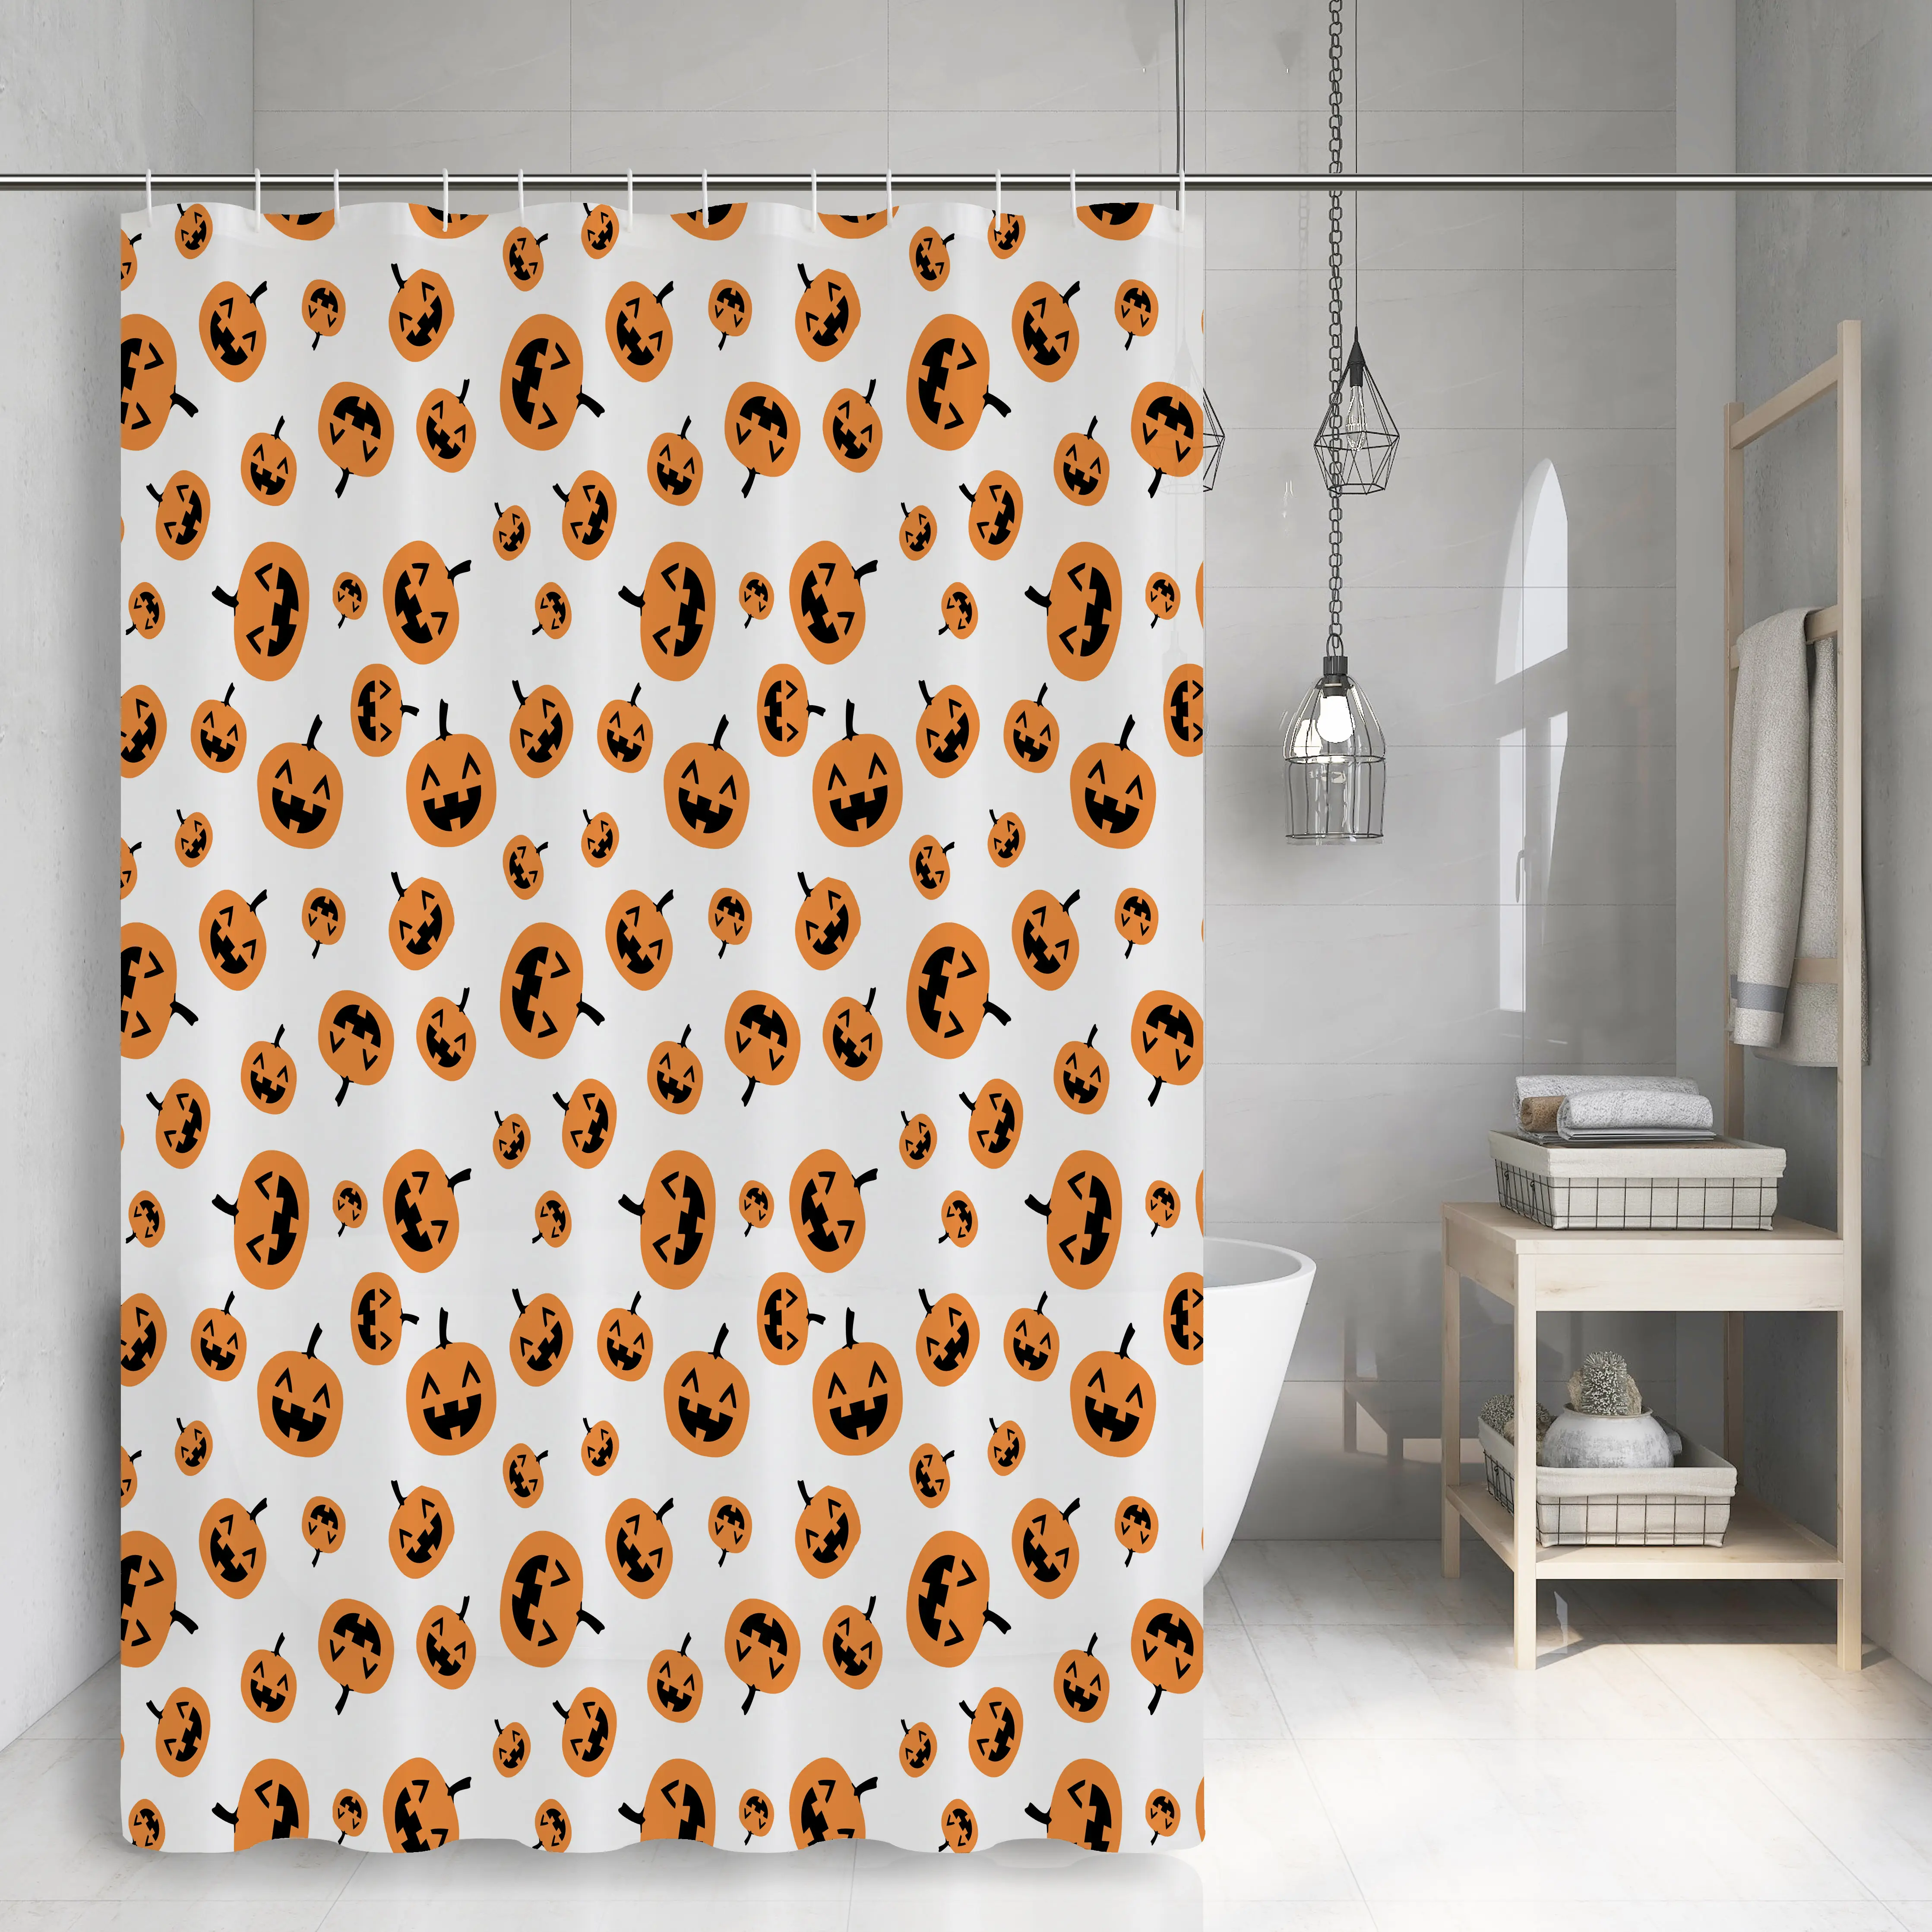 Bathroom halloween Designs Printed PEVA shower curtain liner set